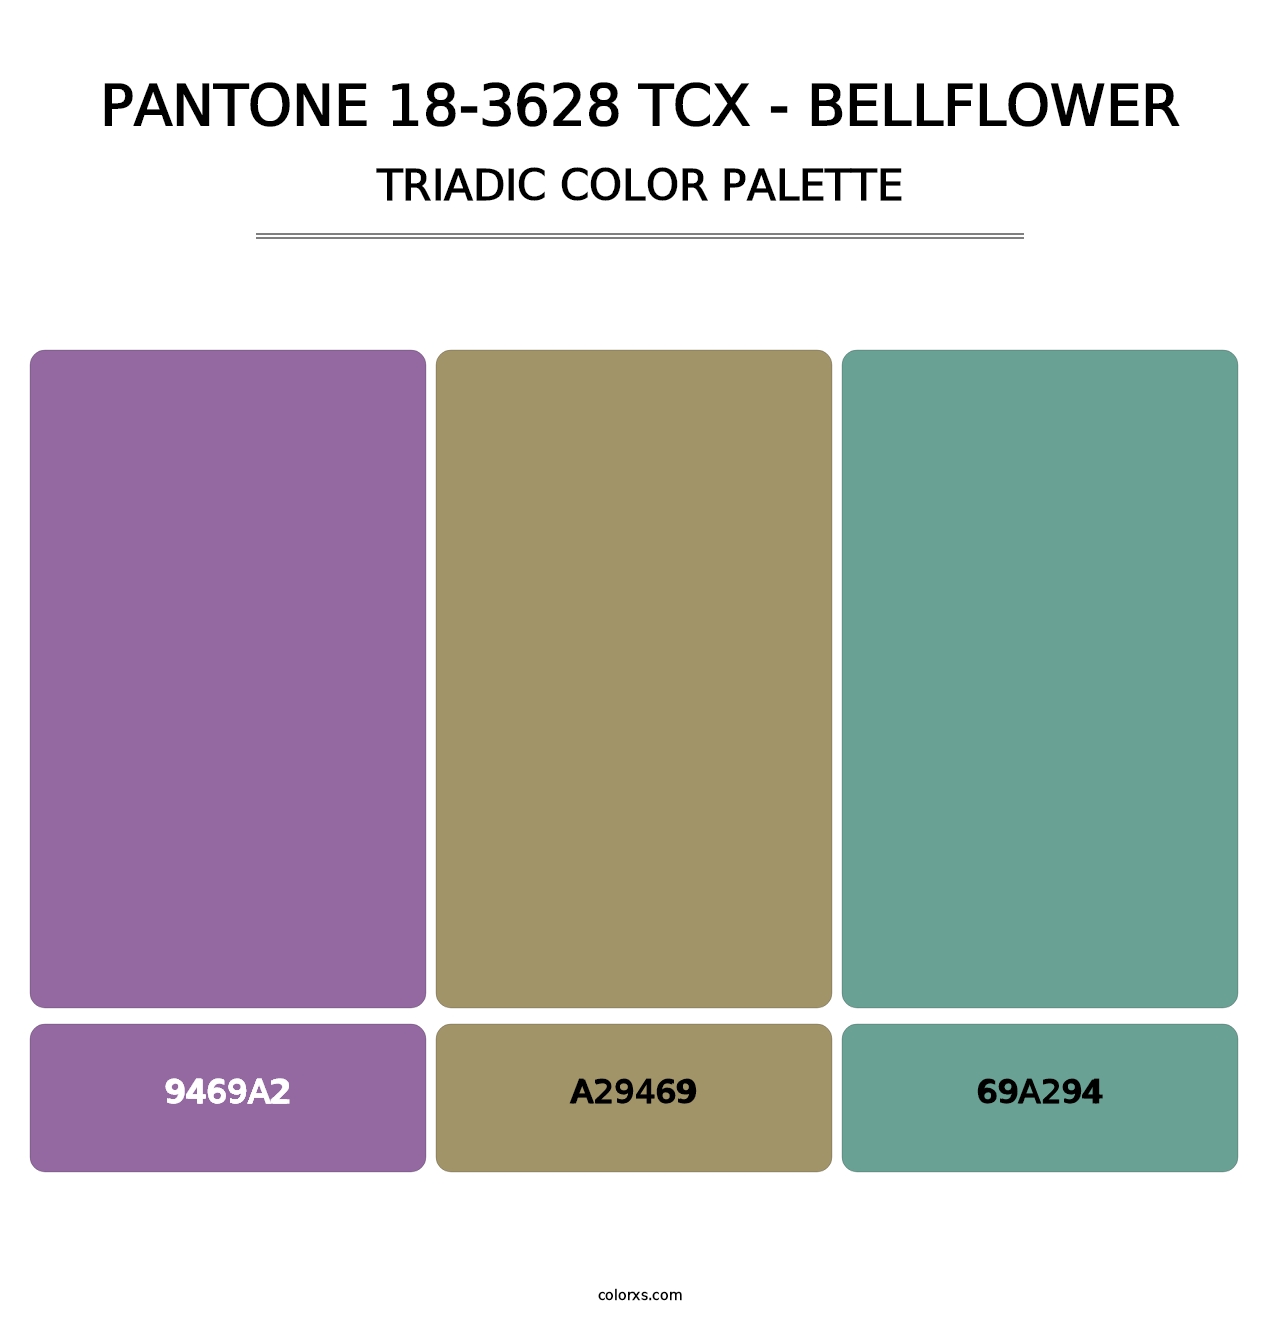 PANTONE 18-3628 TCX - Bellflower - Triadic Color Palette